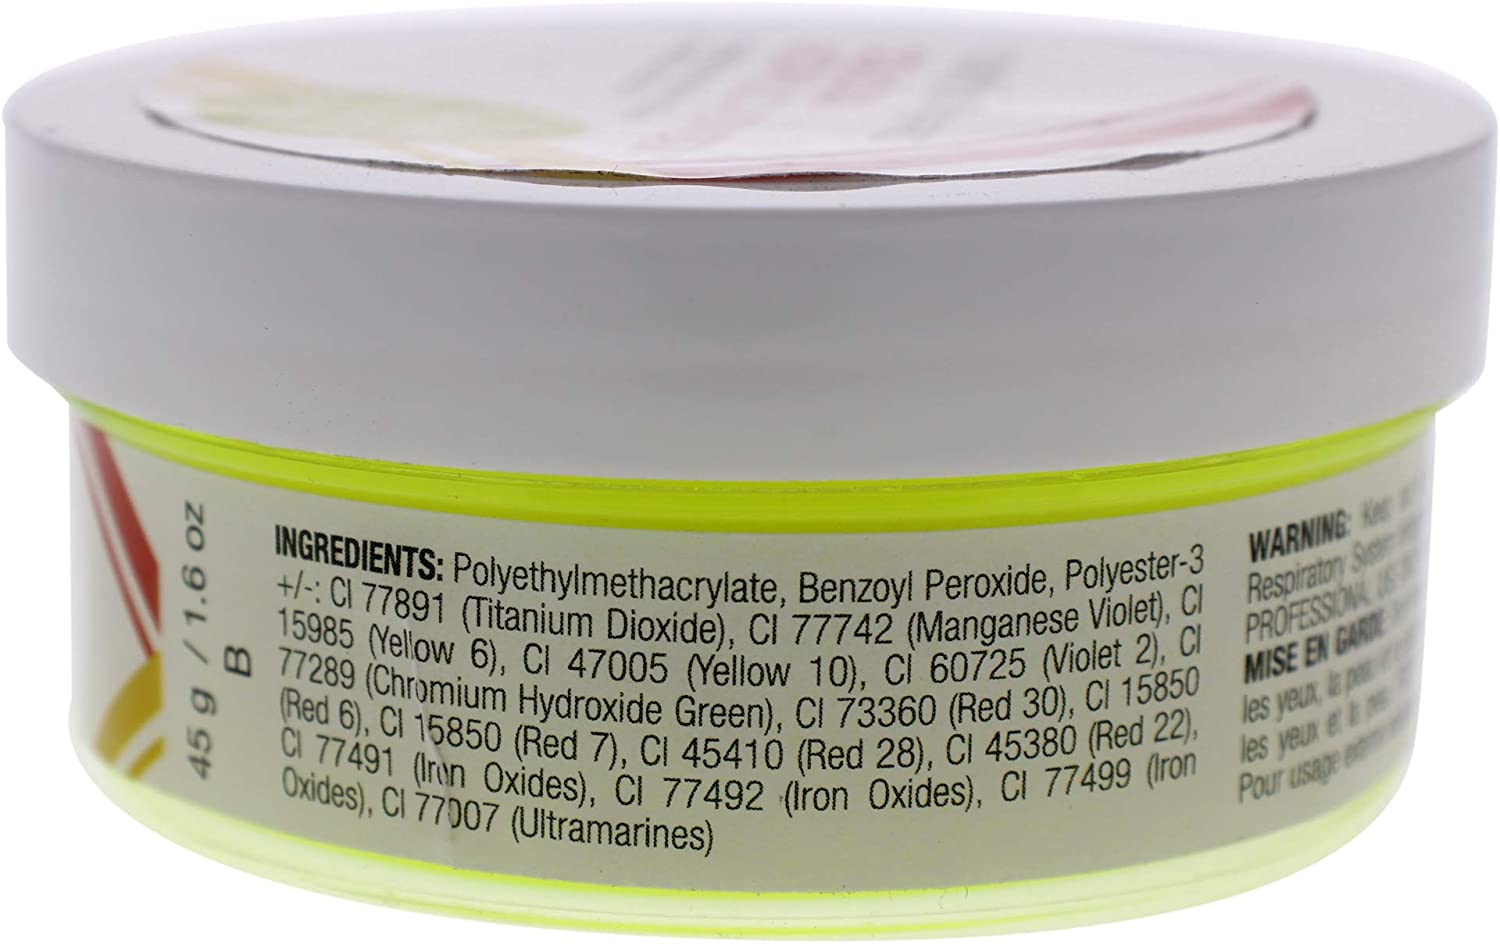 Cuccio Pro Colour Acrylic Powder - Neon Pineapple For Women 1.6 Oz Acrylic Powder